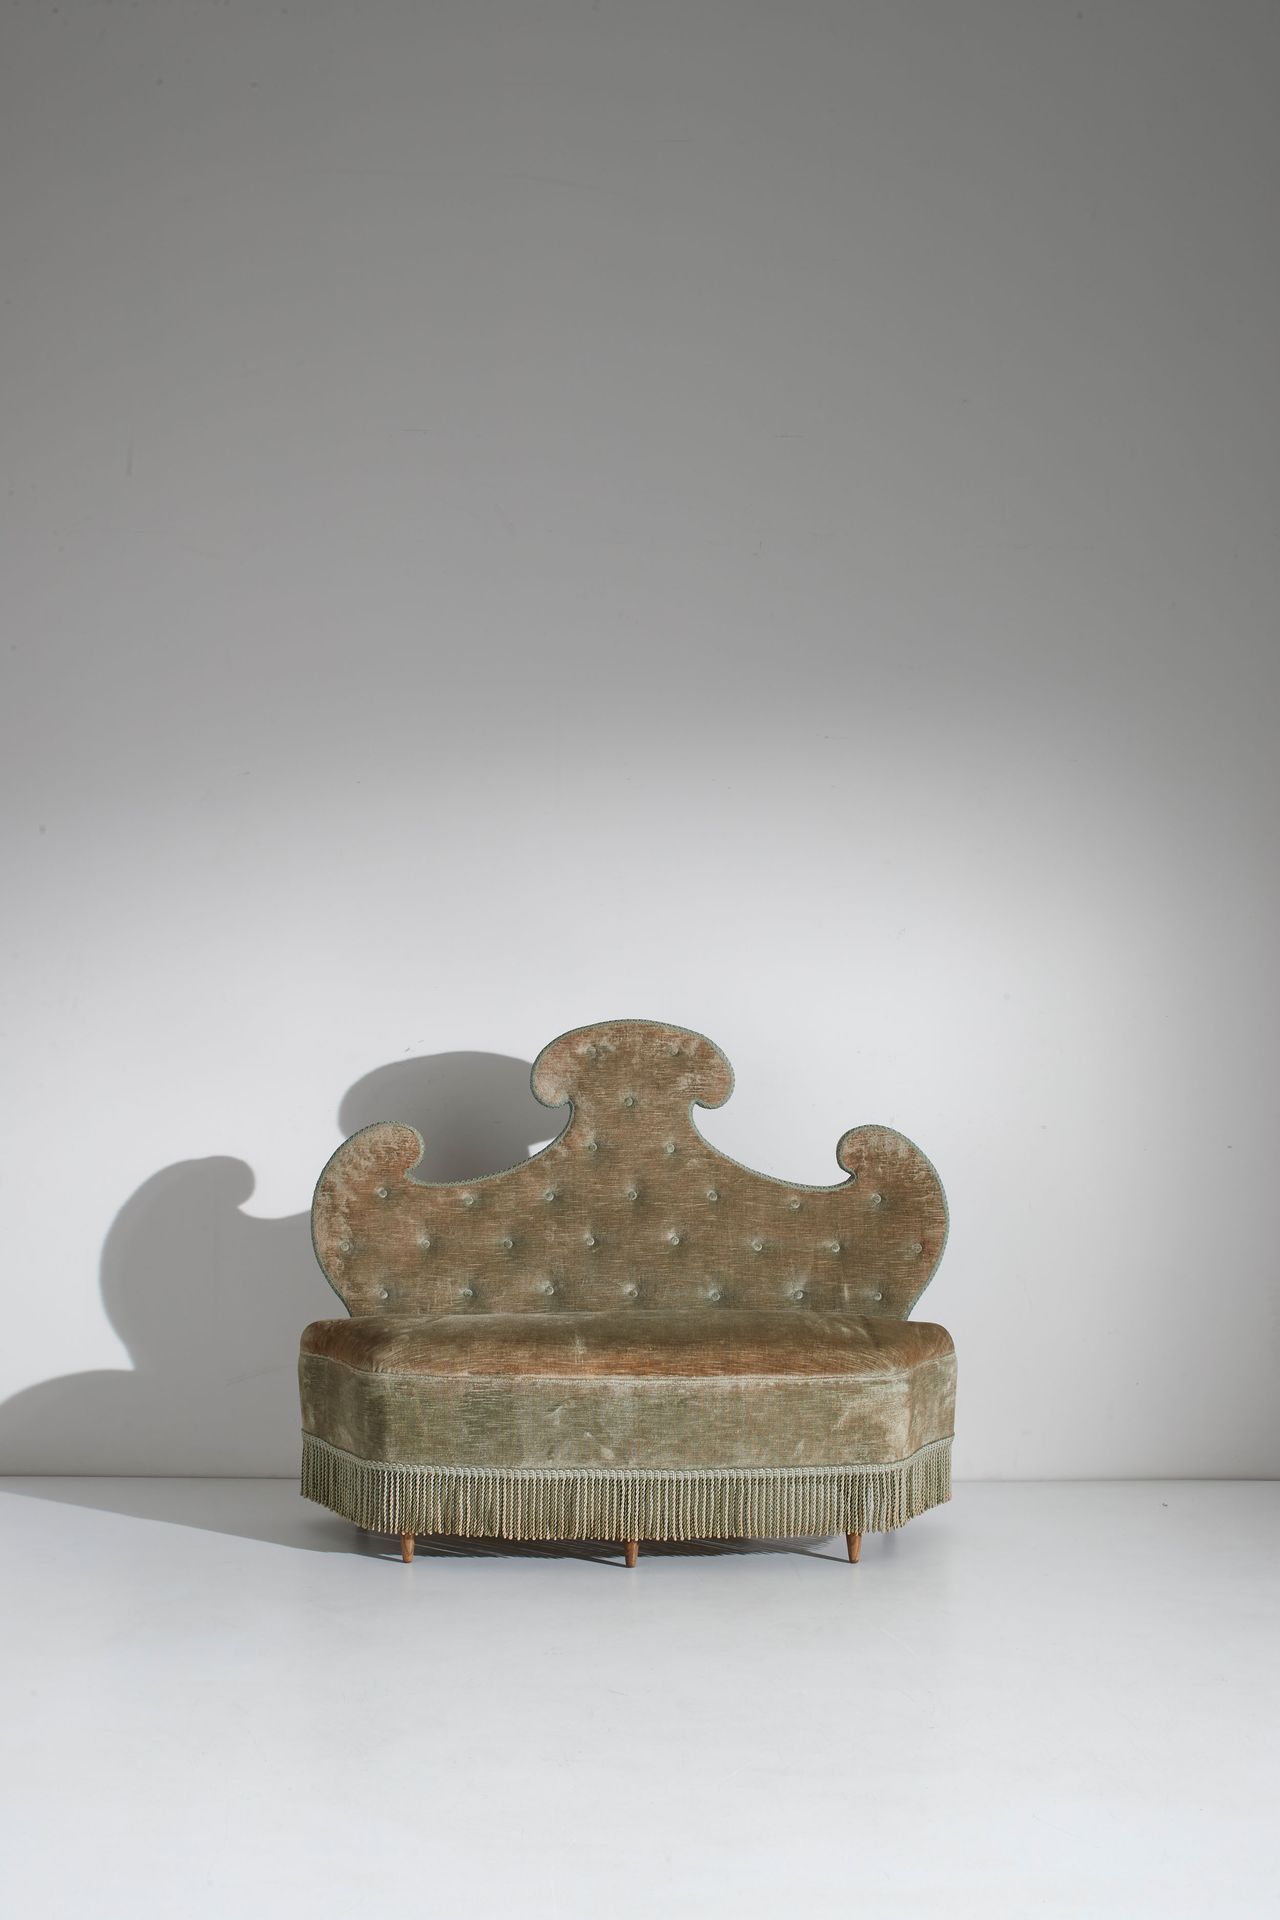 CESARE LACCA 入口处的沙发。水曲柳木，软垫织物。意大利 1950 年代。
cm 90x125x45
A SETTEE BY C.LACCA



整&hellip;